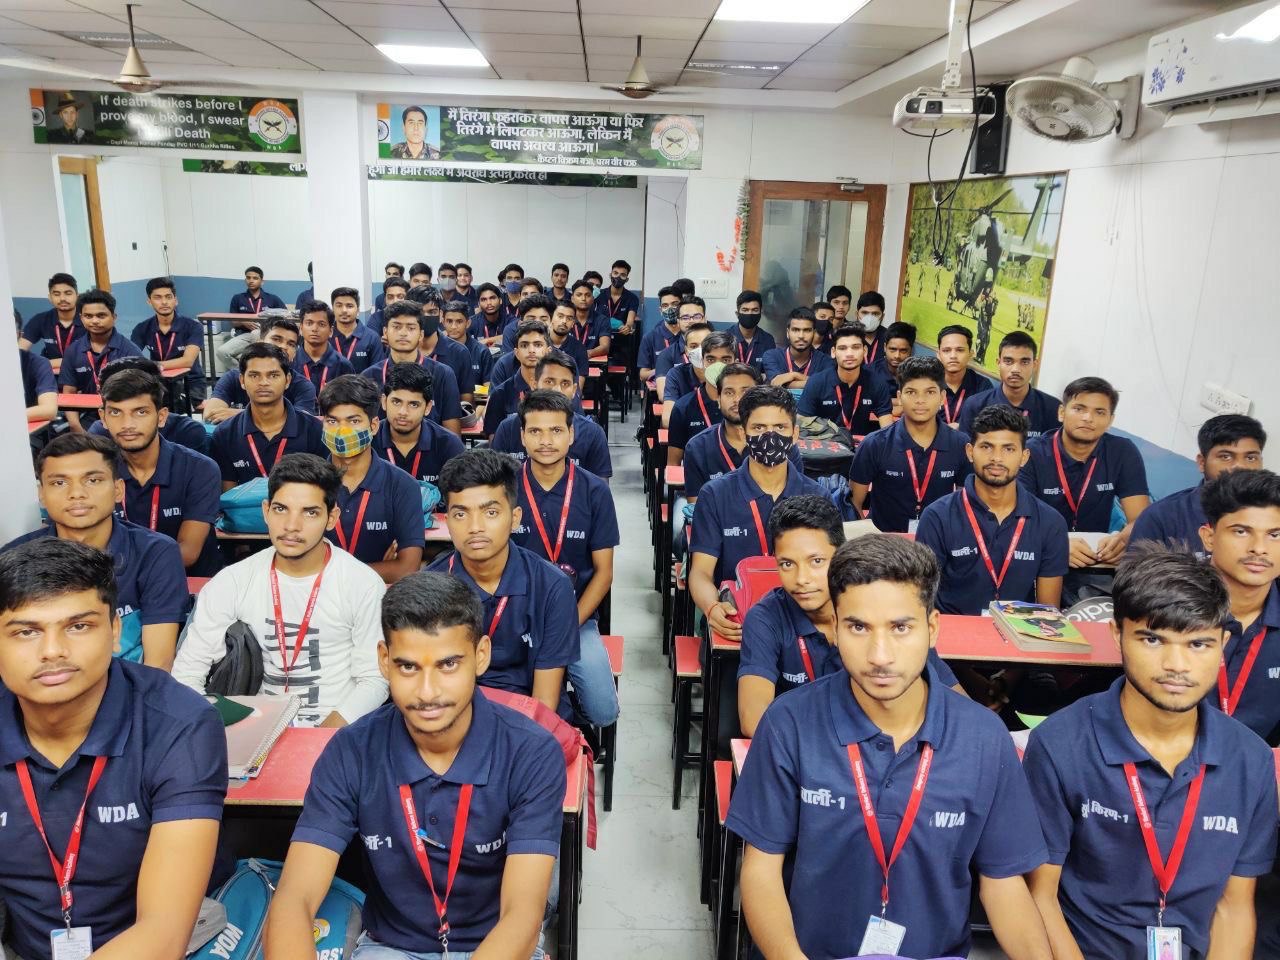 Best NDA Academy in Lucknow | Join WDA Lucknow